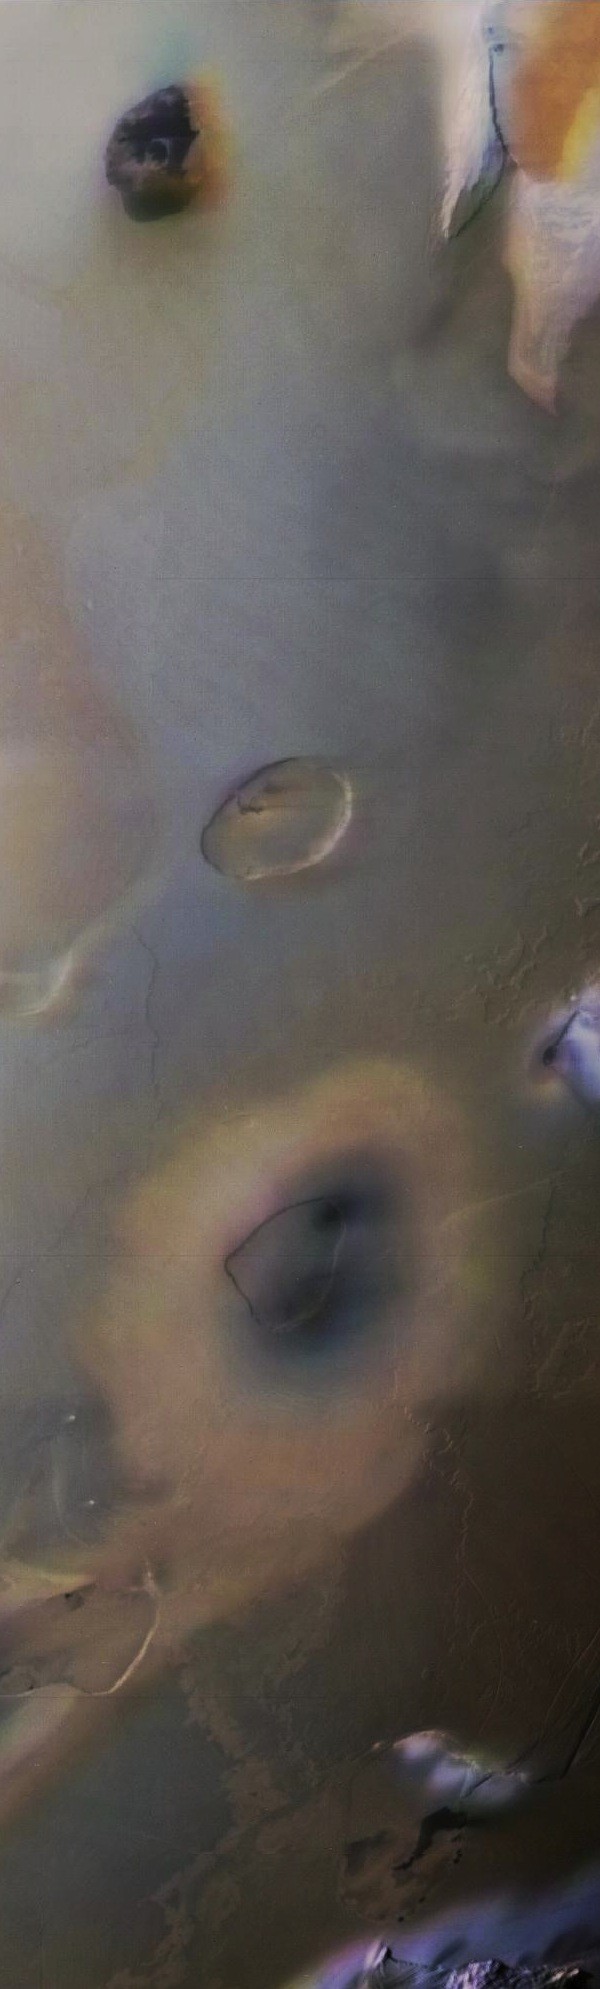 Image credit: NASA / JPL-Caltech, Voyager 1 spacecraft.